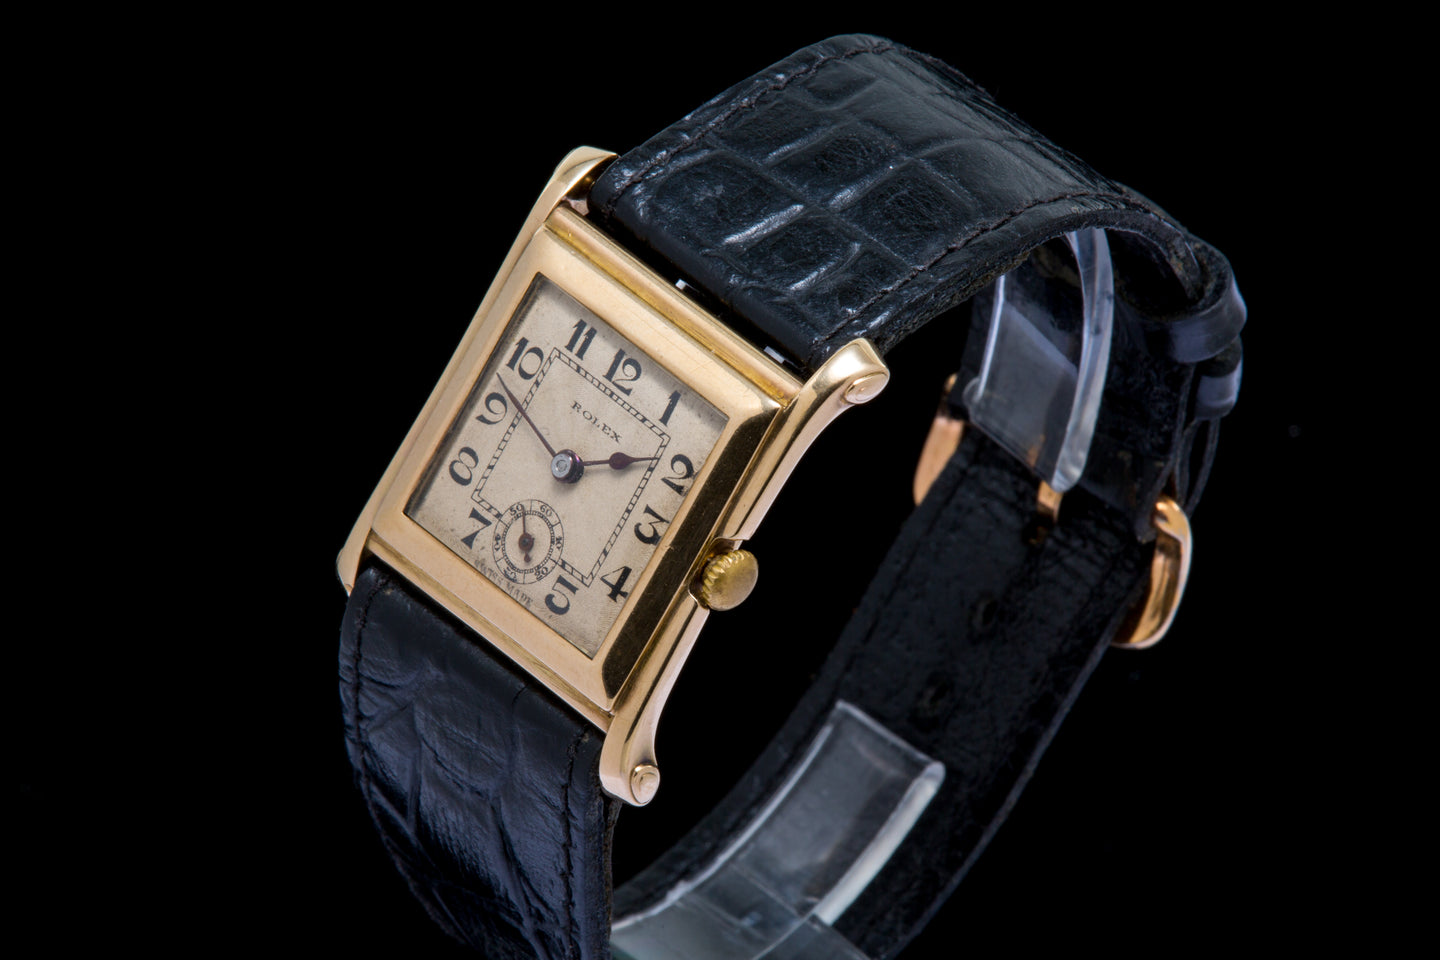 Rolex Presentation Watch – The Watch Collector